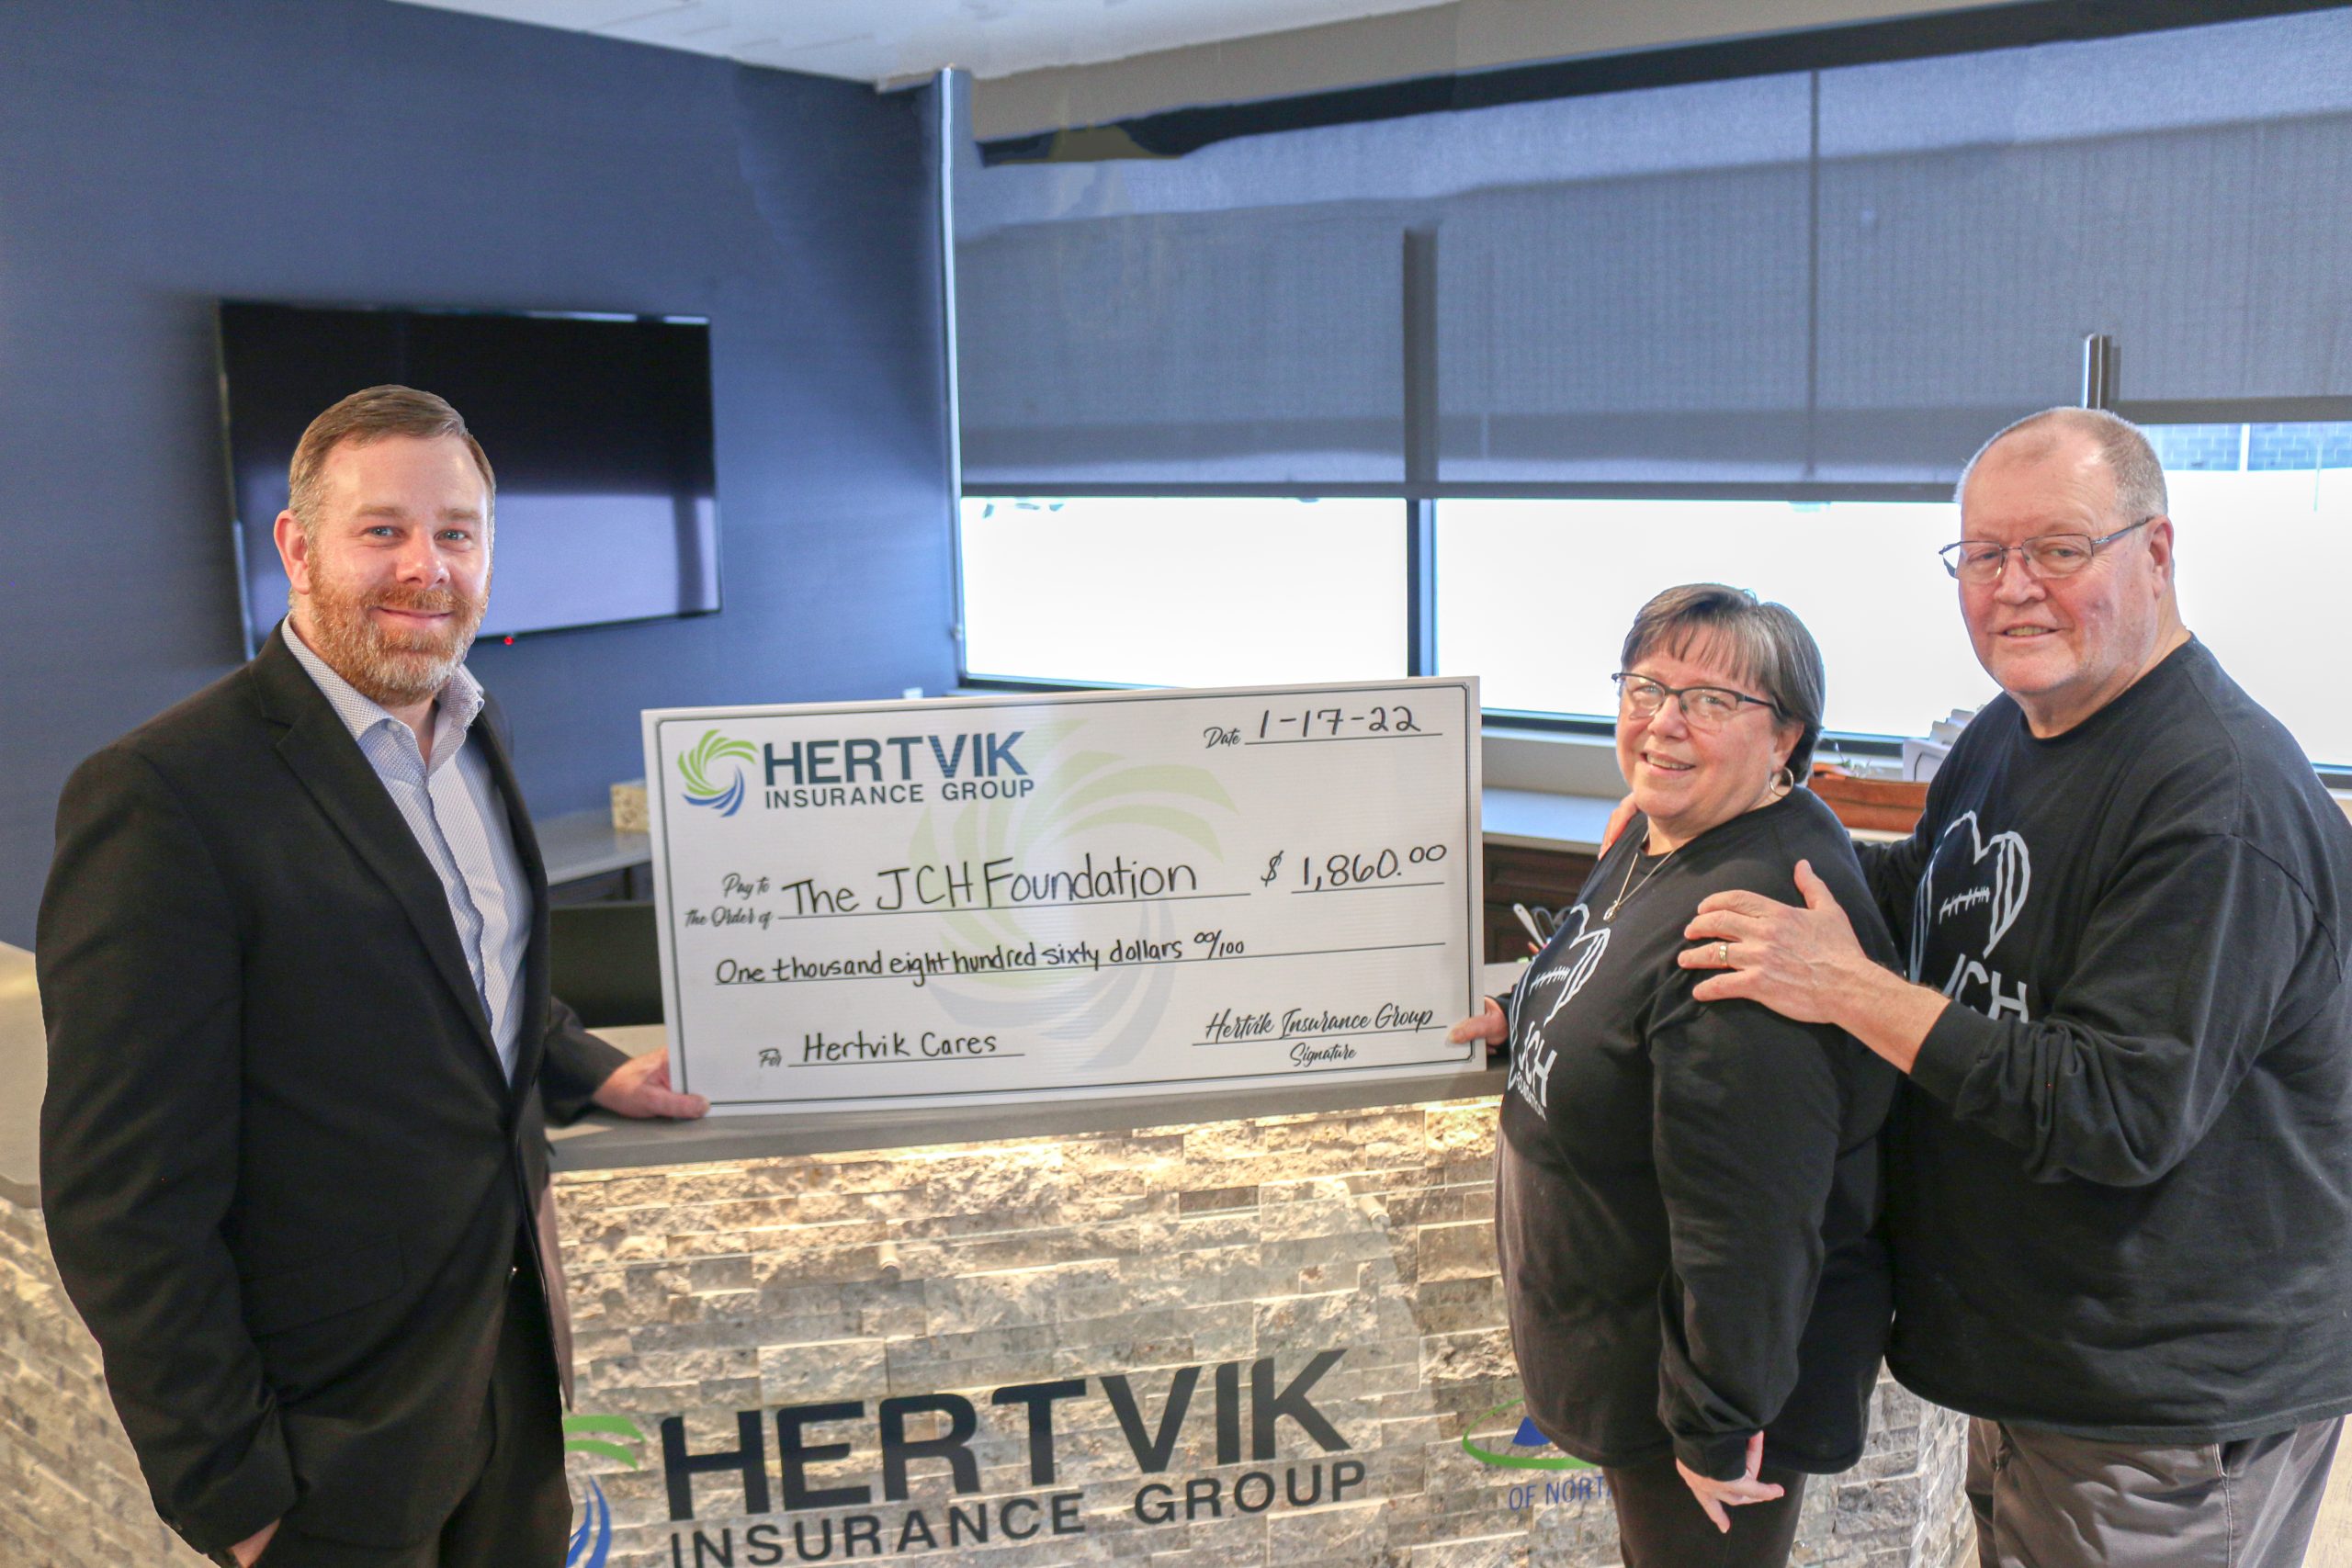 The JCH Foundation Hertvik Cares Medina Ohio